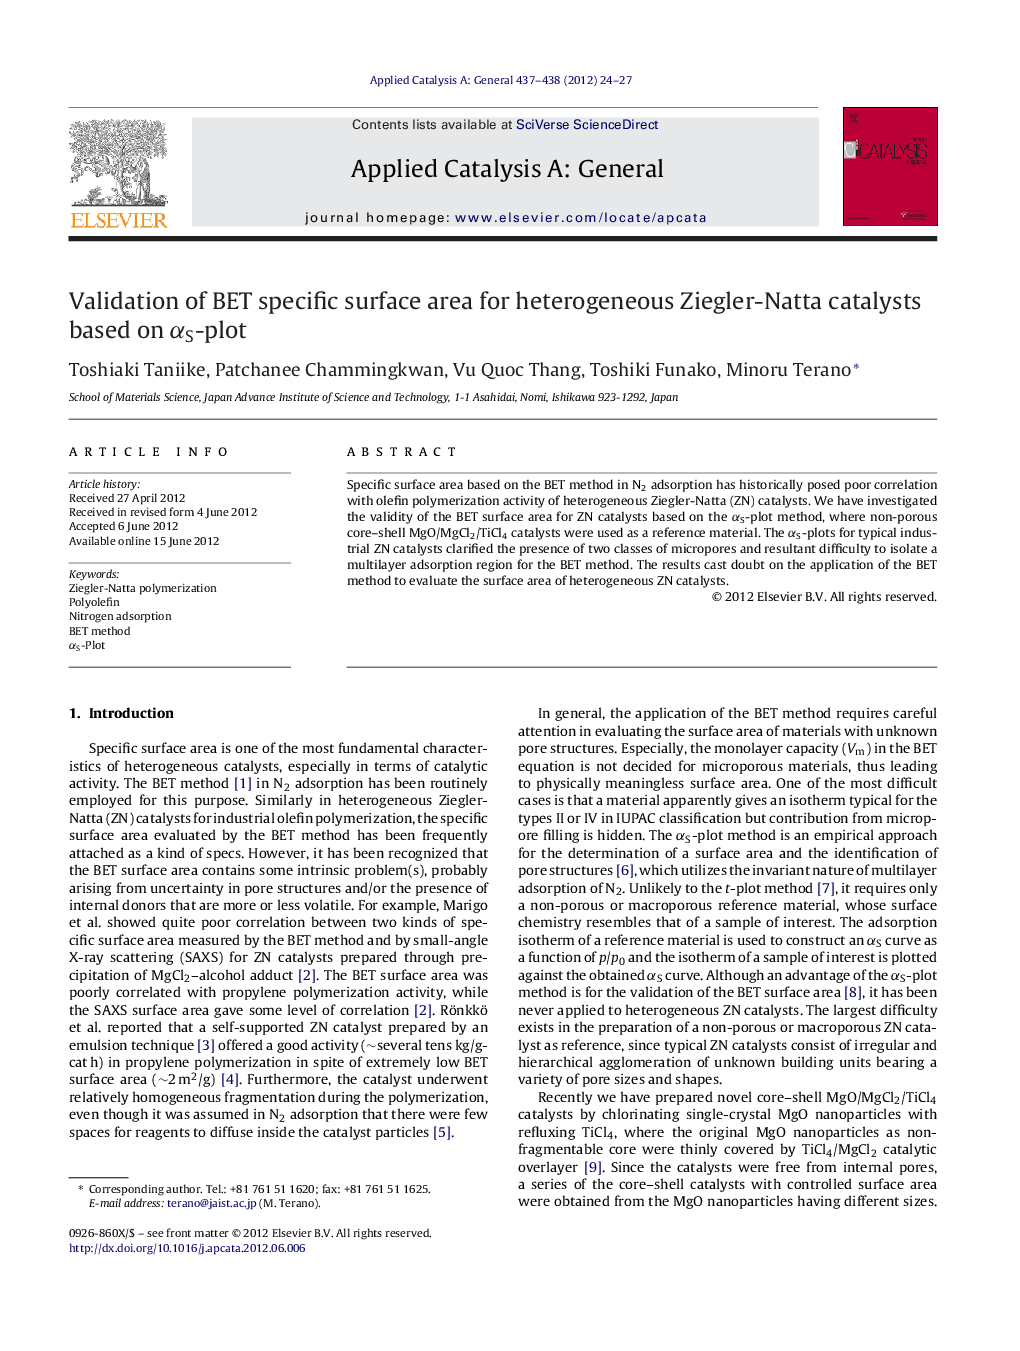 Validation of BET specific surface area for heterogeneous Ziegler-Natta catalysts based on αS-plot